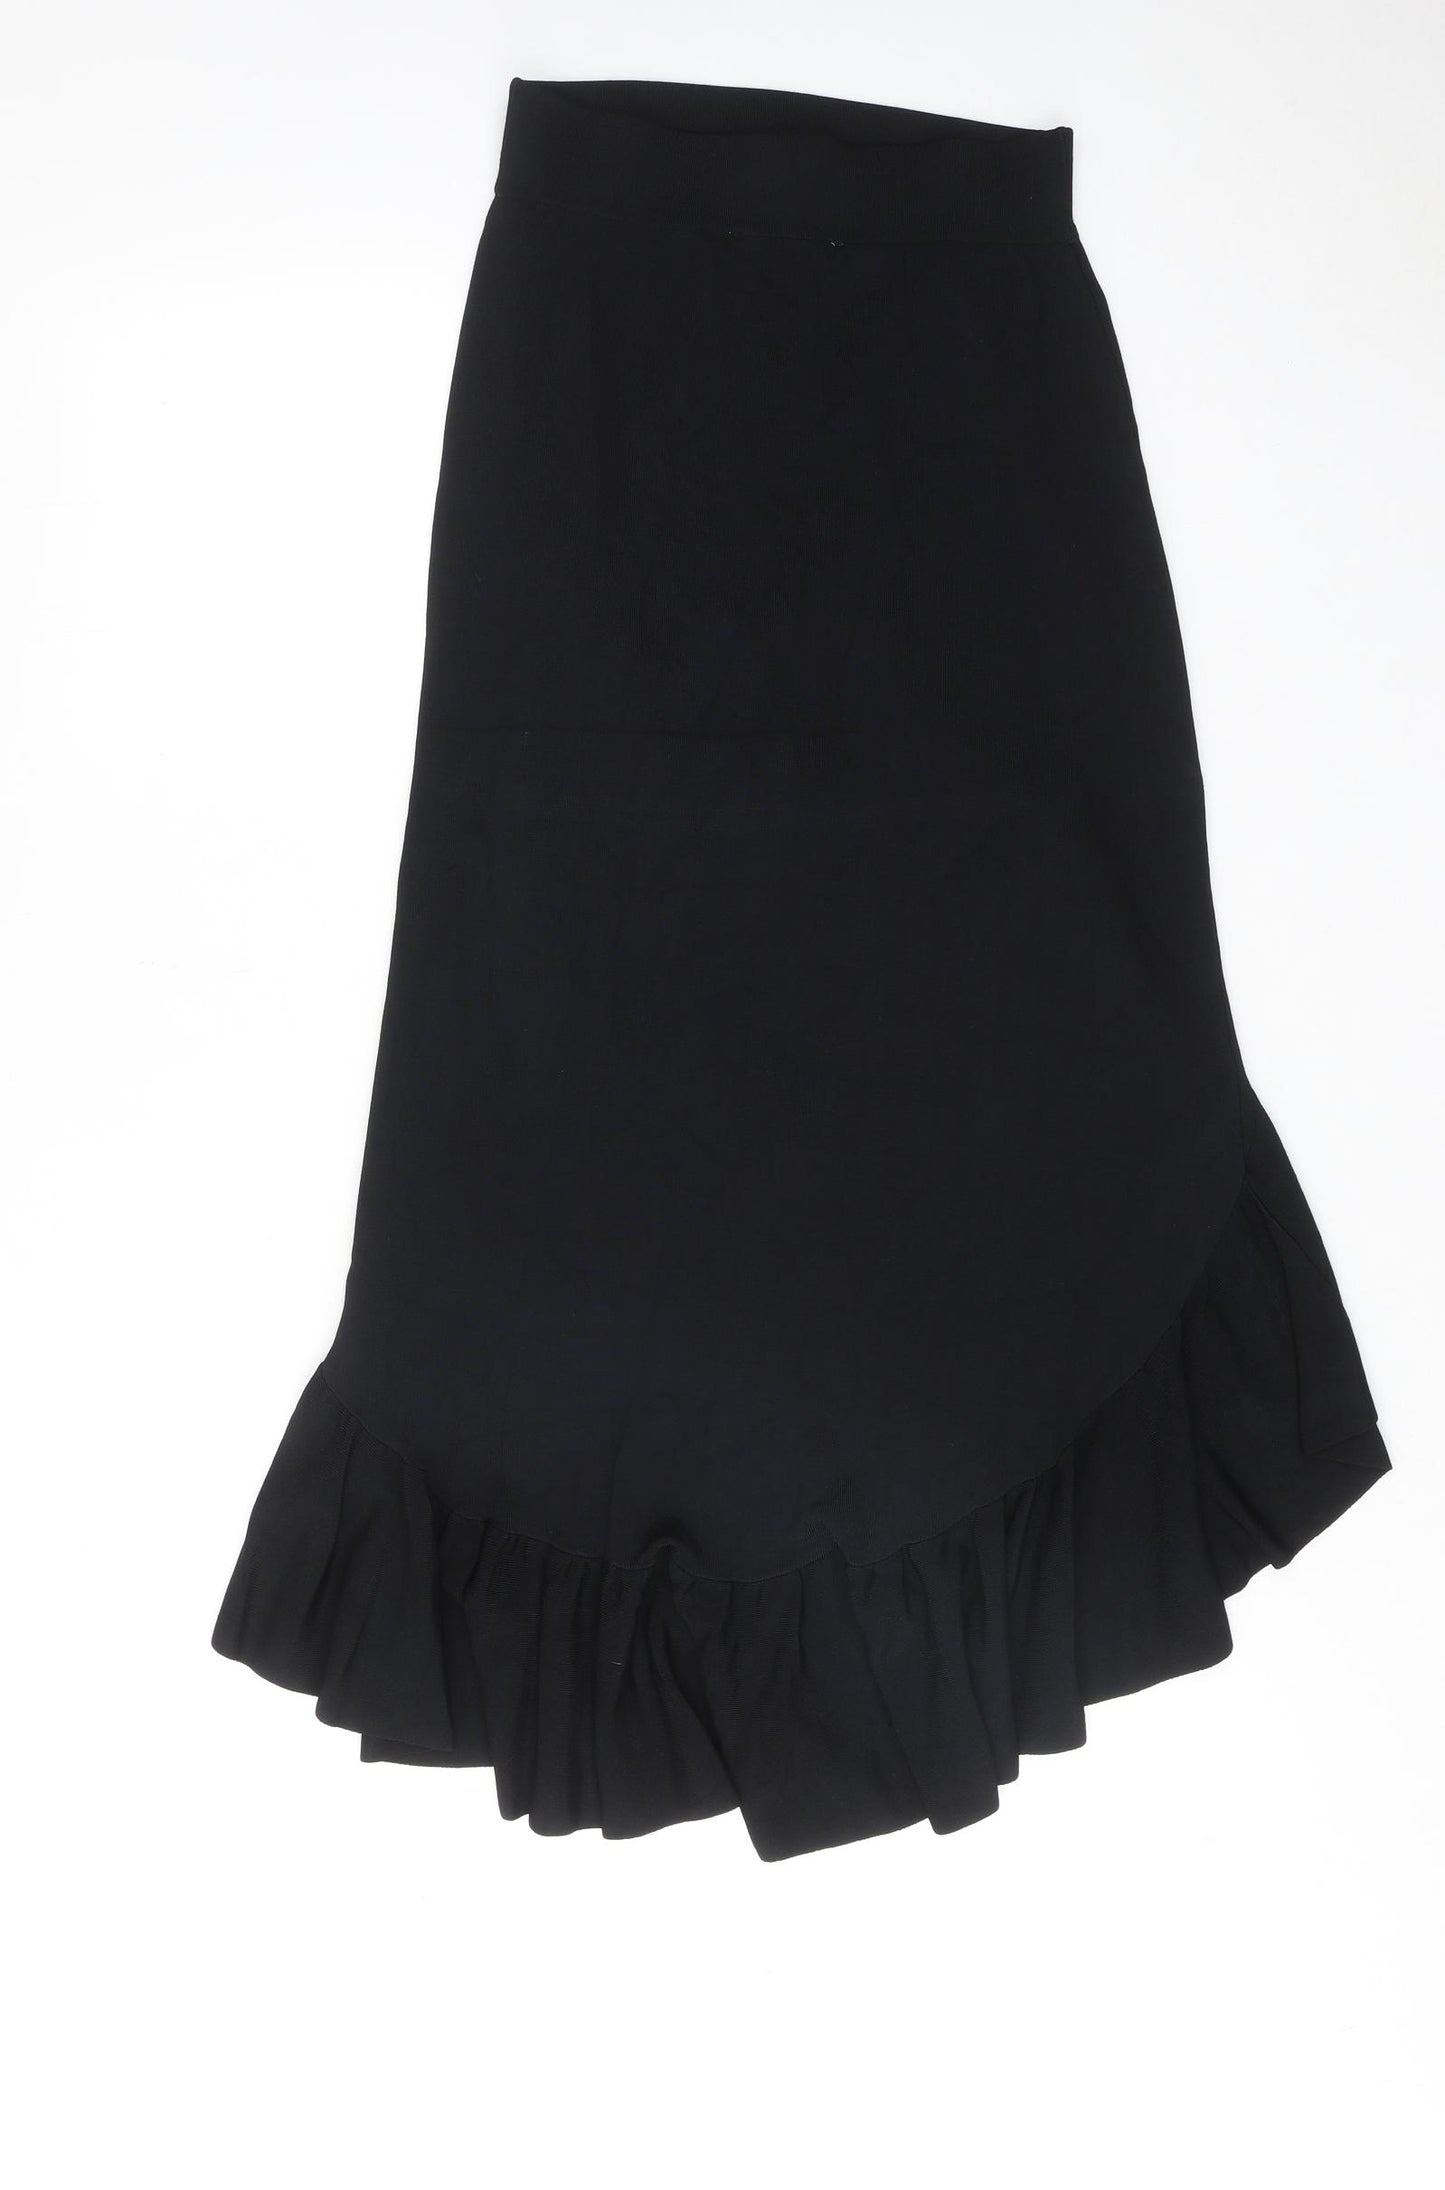 Zara Womens Black Viscose Swing Skirt Size S